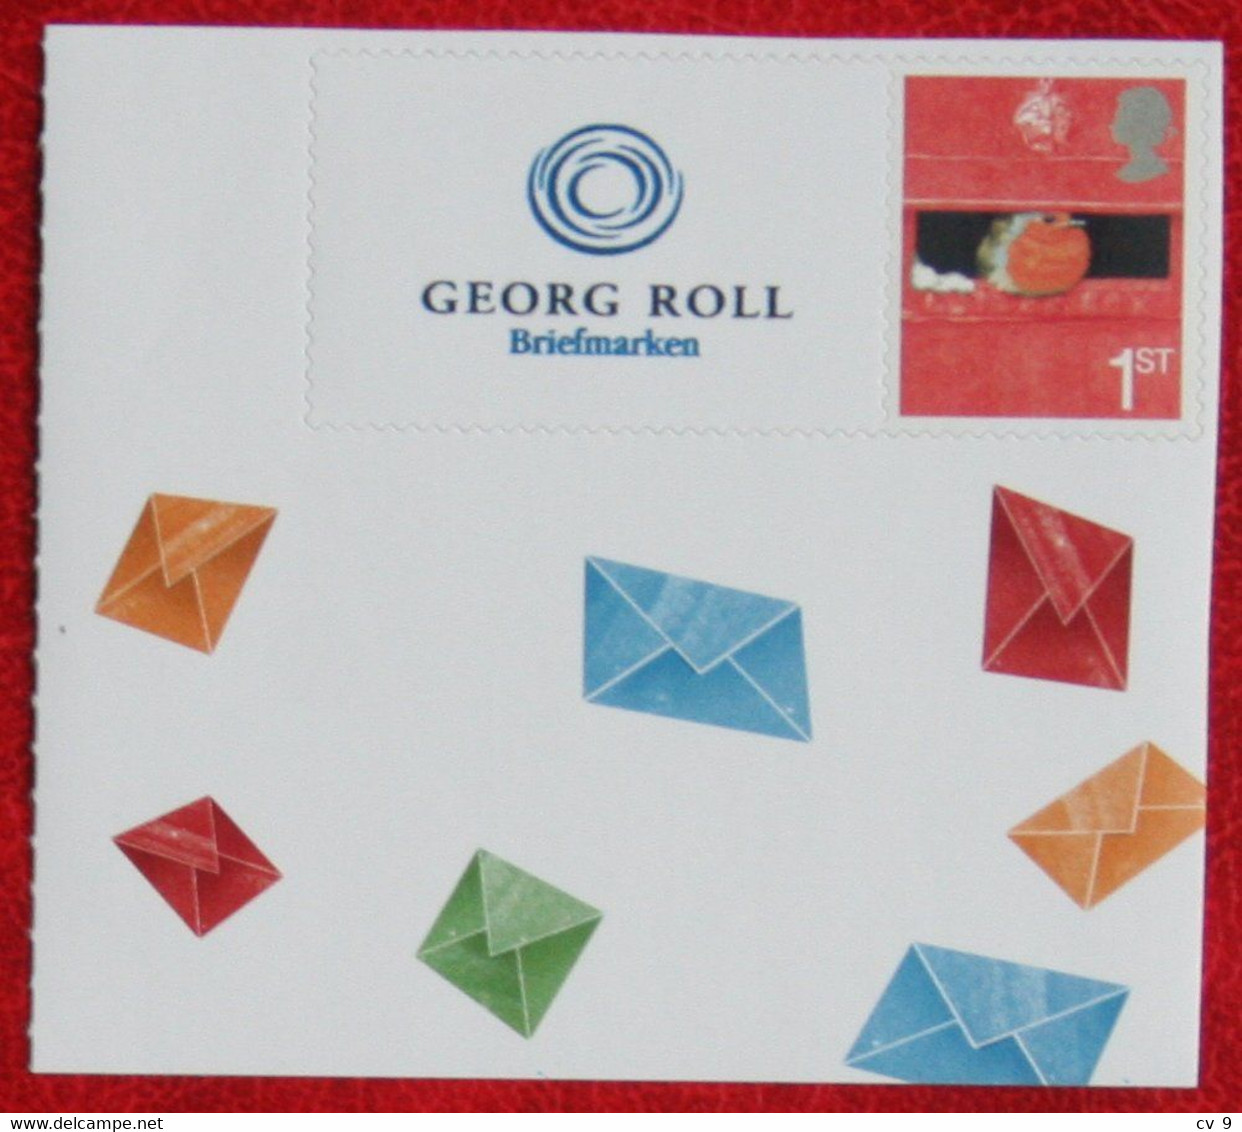 Smiler Smilers Personal Stamp Georg Roll Briefmarken ROBIN Bird POSTFRIS MNH ** ENGLAND GRANDE-BRETAGNE GB GREAT BRITAIN - Timbres Personnalisés